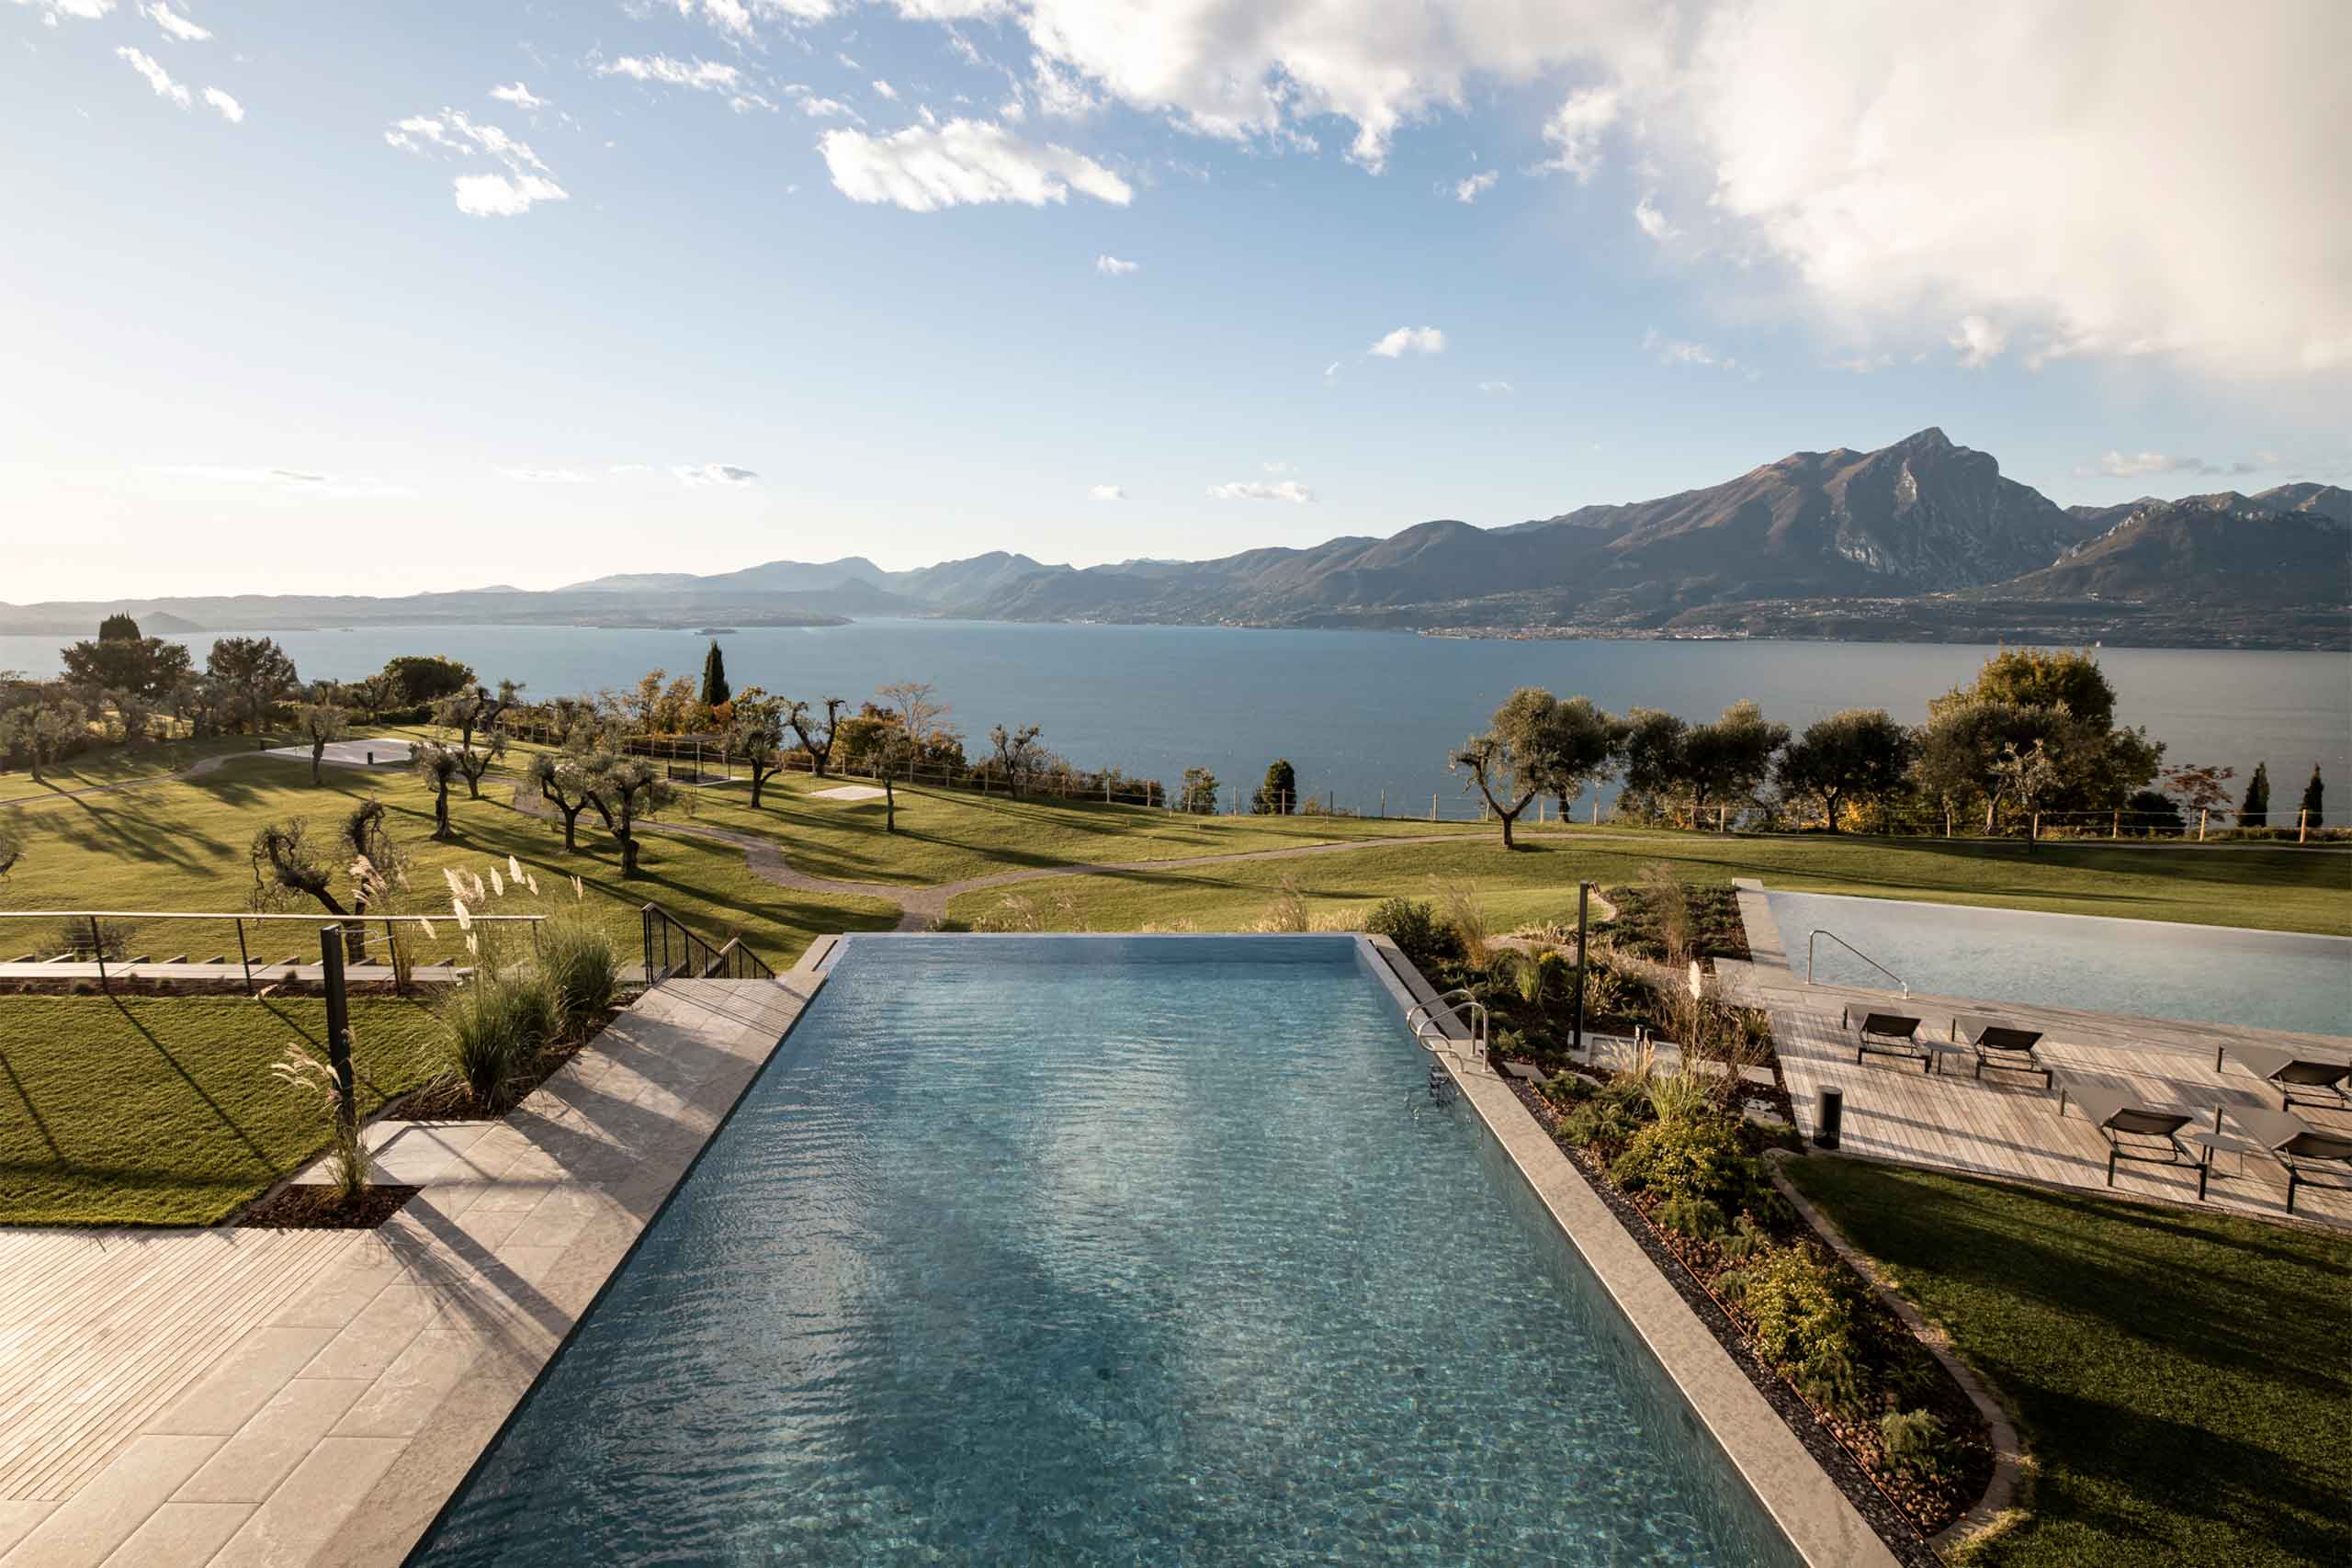 Pool overlooking the lake at Cape of Senses, Lake Garda, Italy